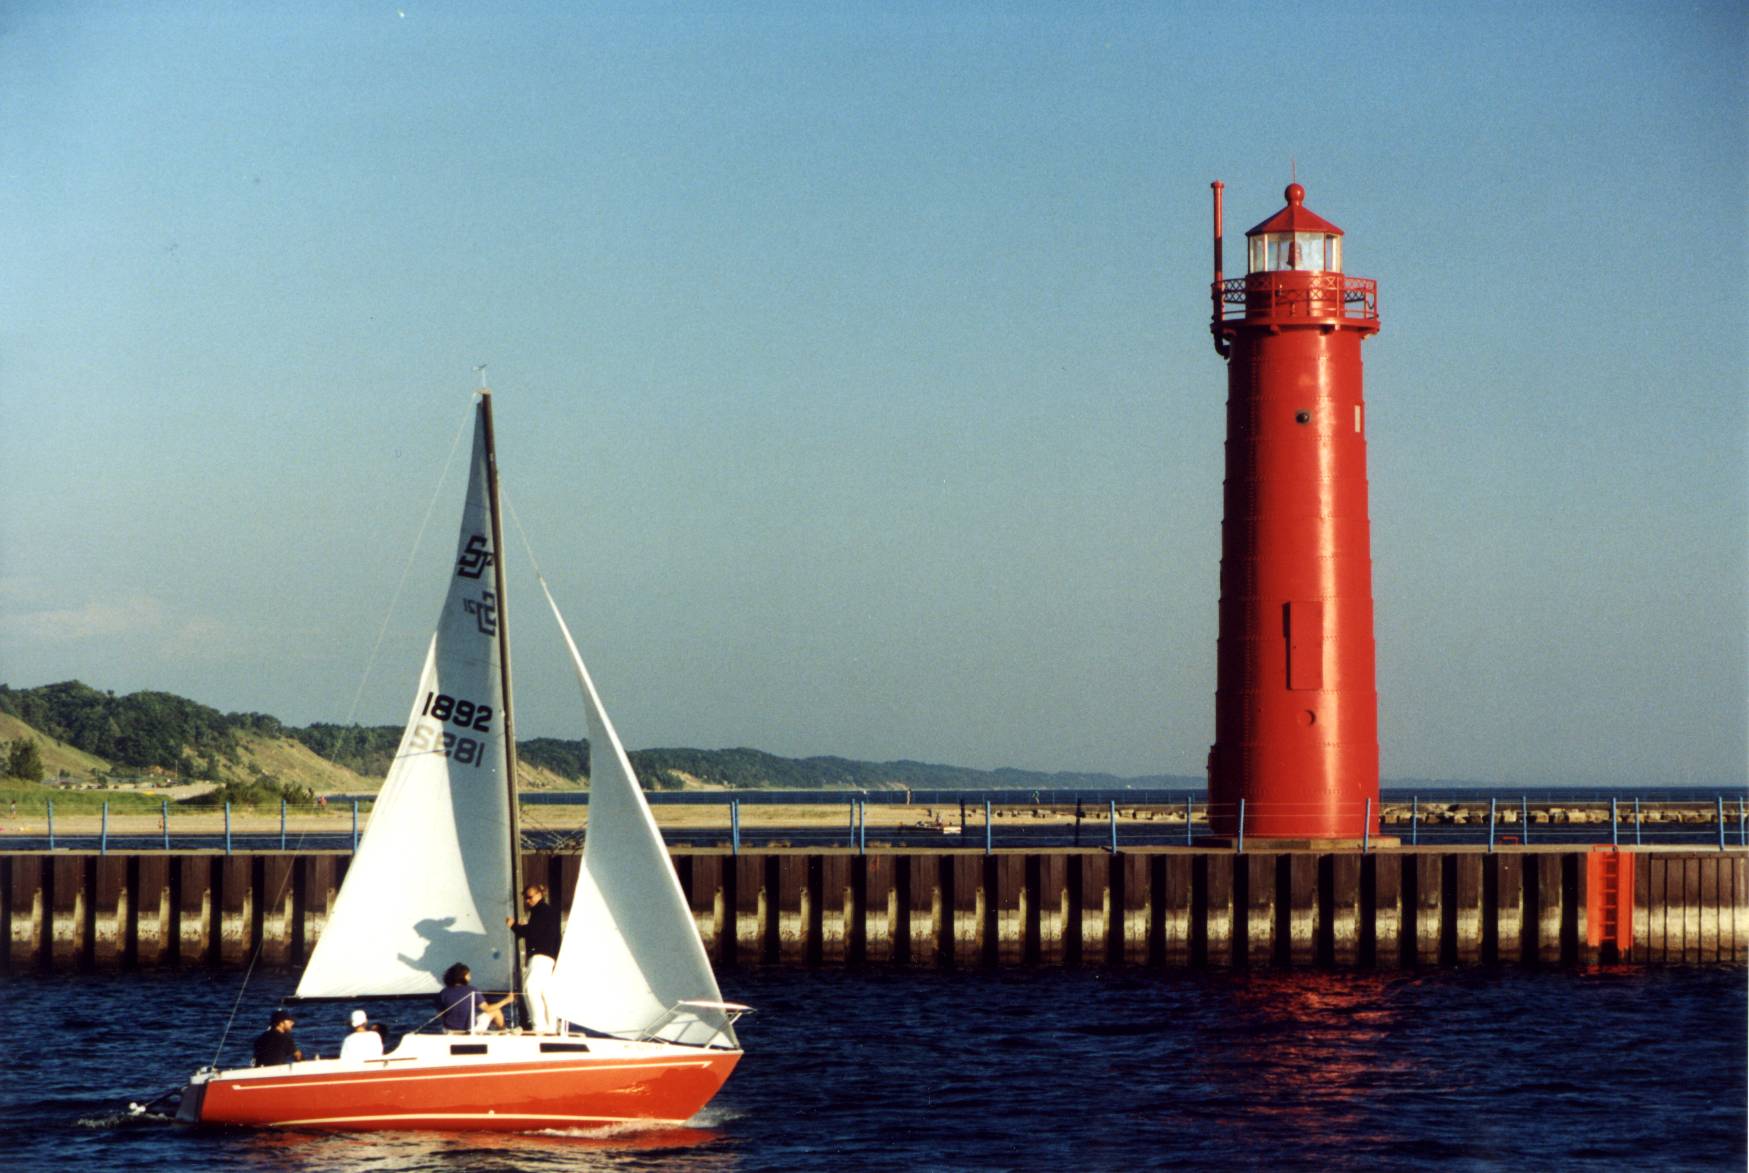 Muskegon Lighthouse & Sailboat